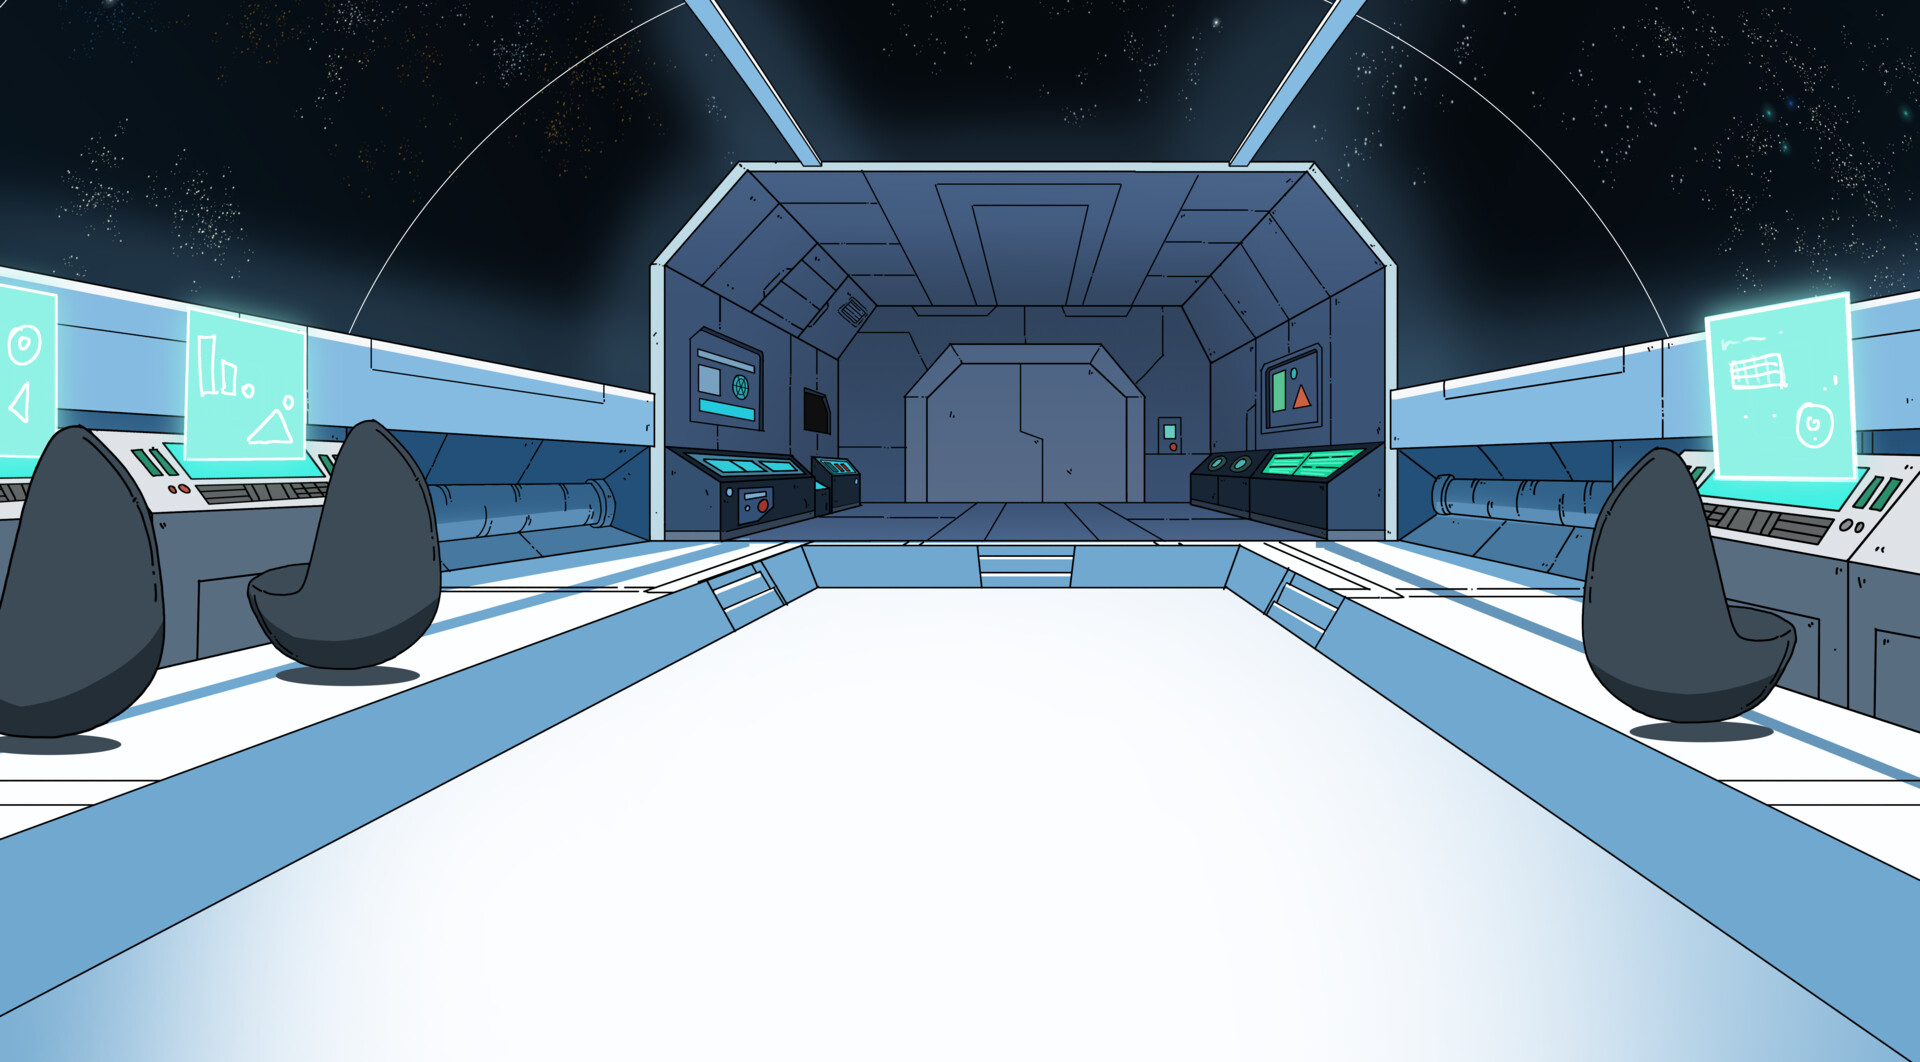 ArtStation - Space Cartoon style Background